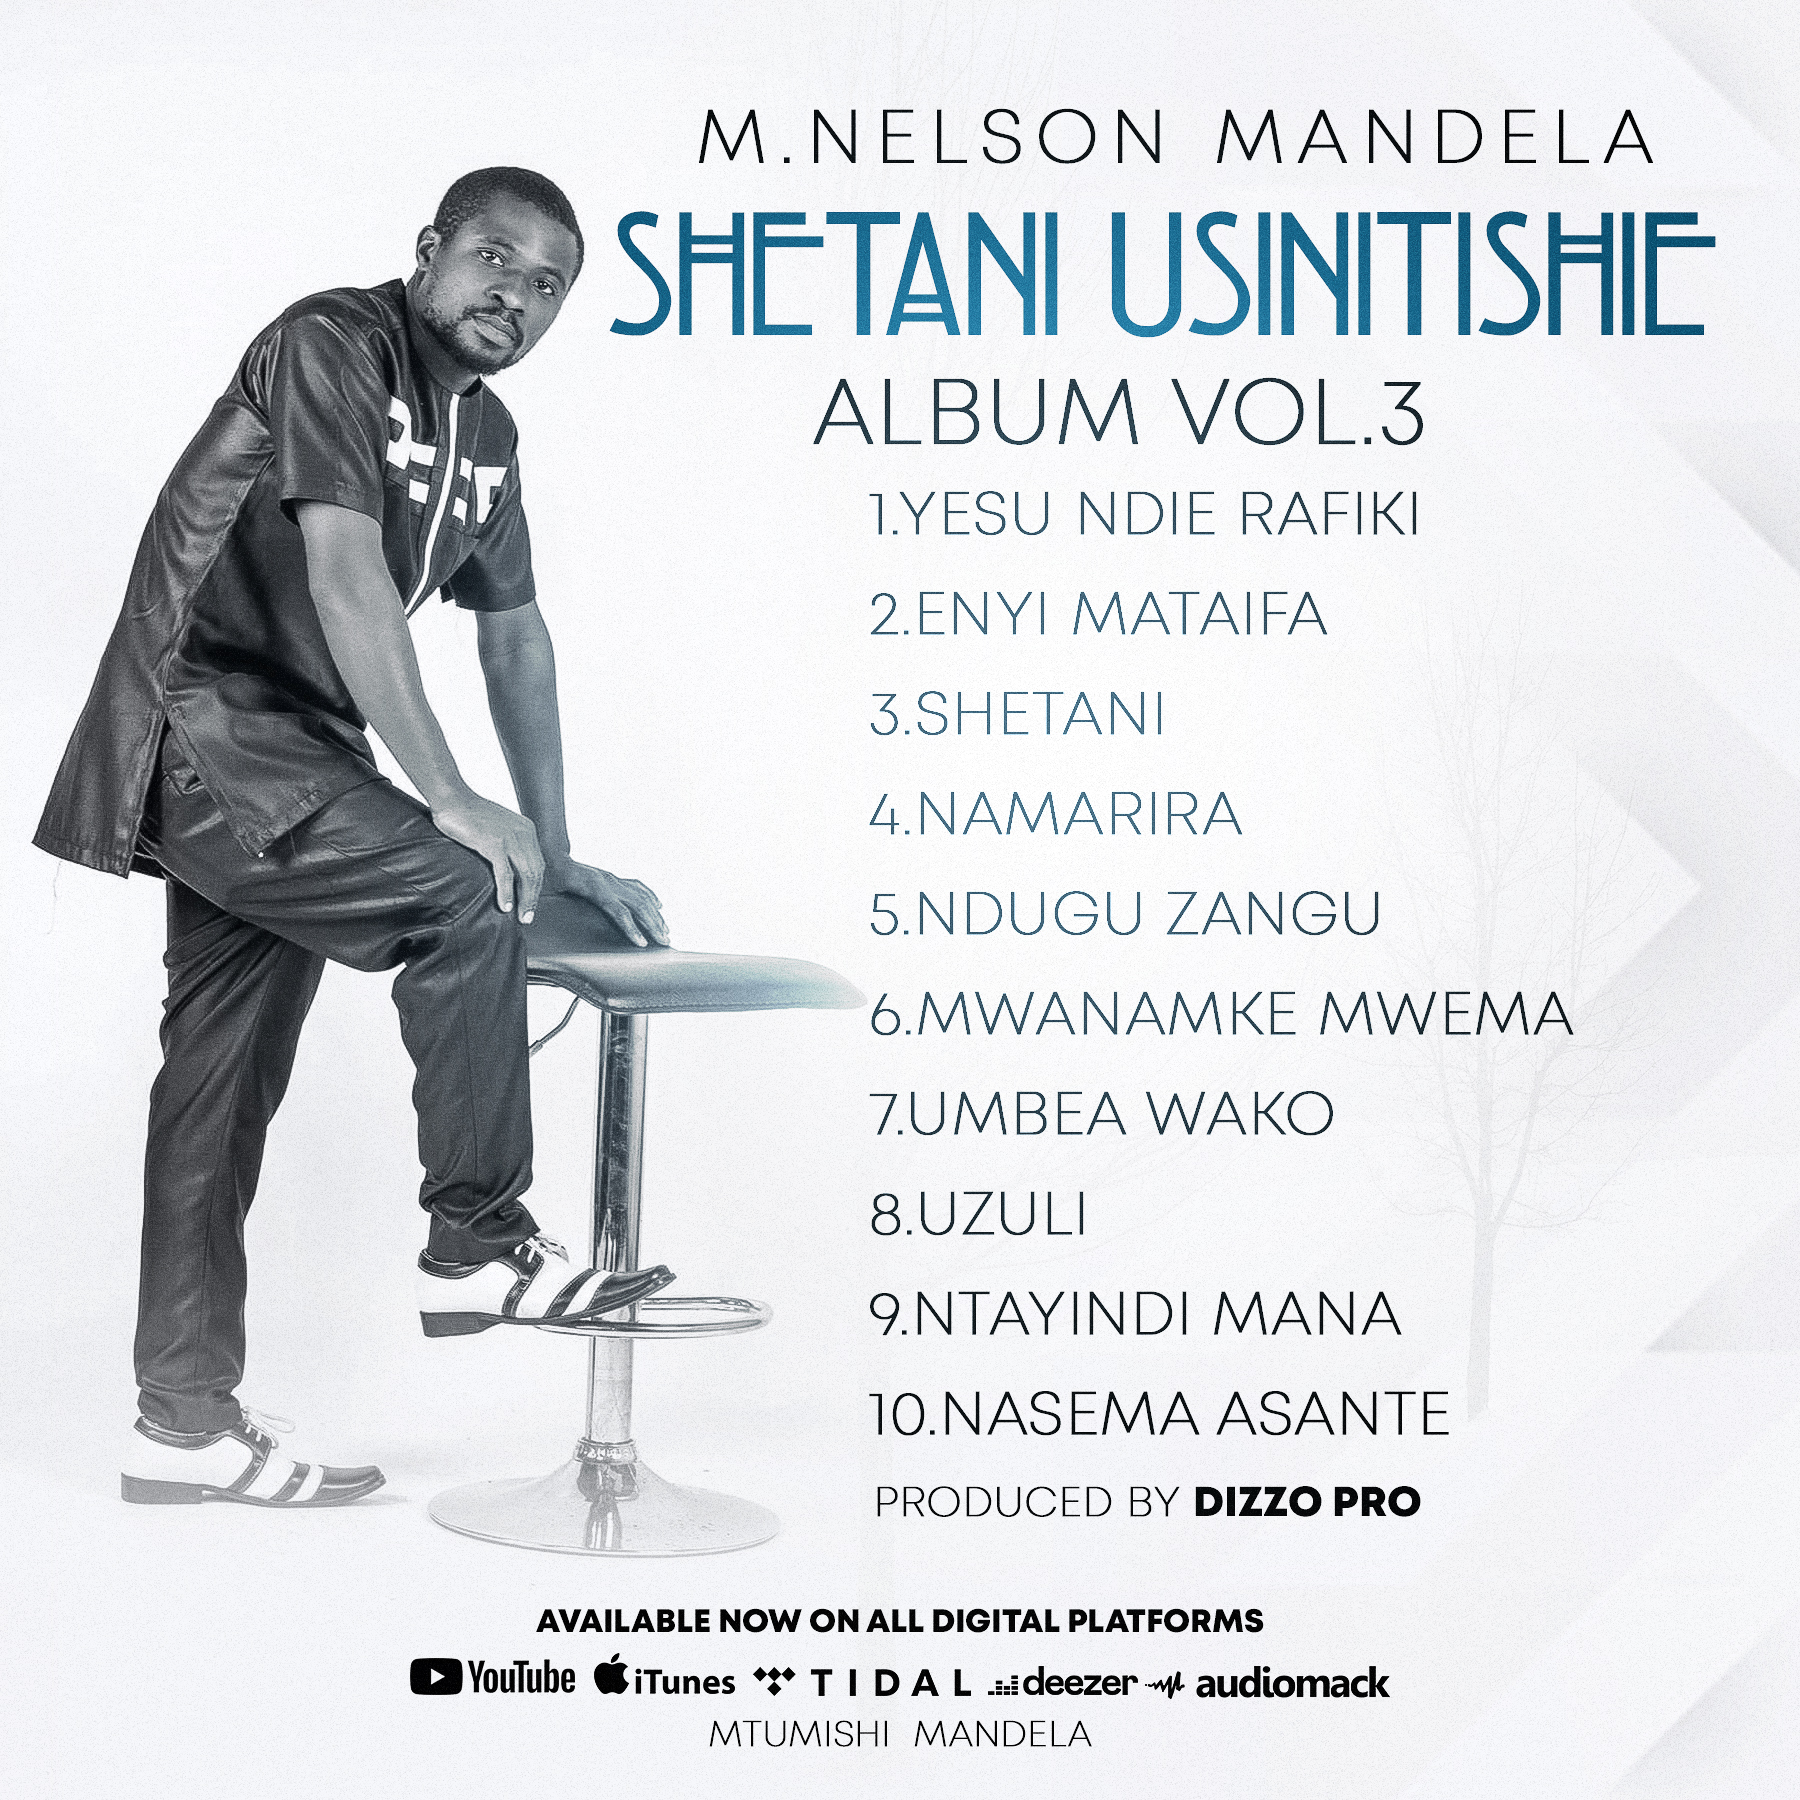 Shetani Usinitishie by Nelson Mandela | Album